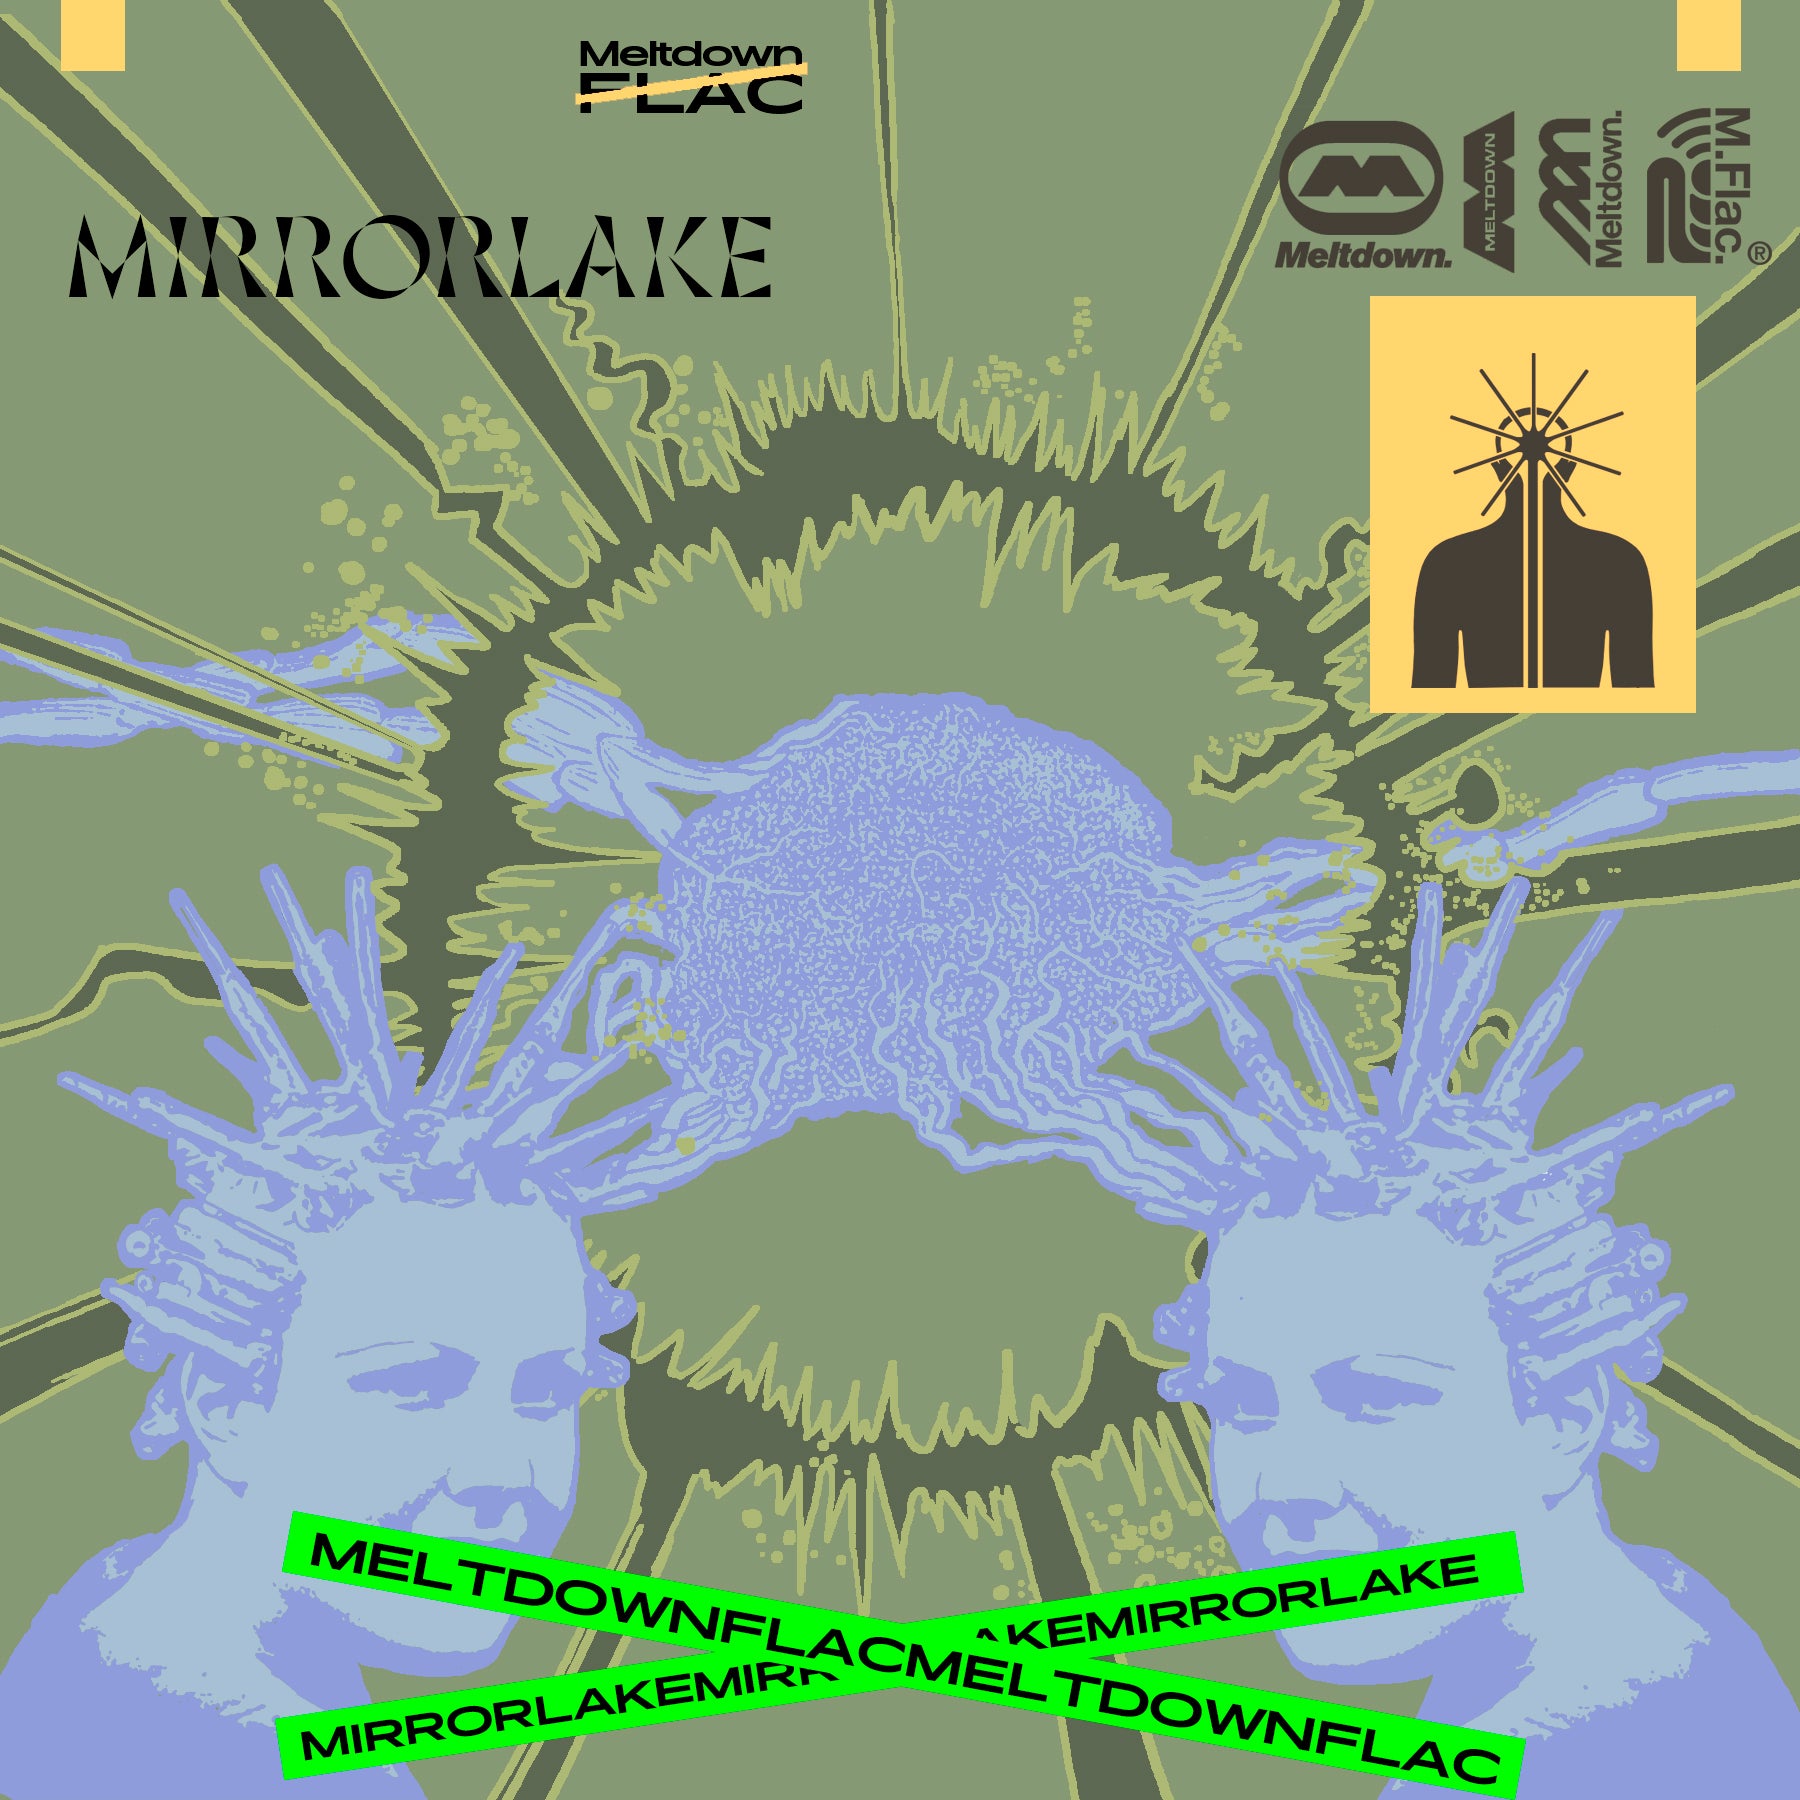 The Meltdown.Flac Edition 015 with Mirrorlake